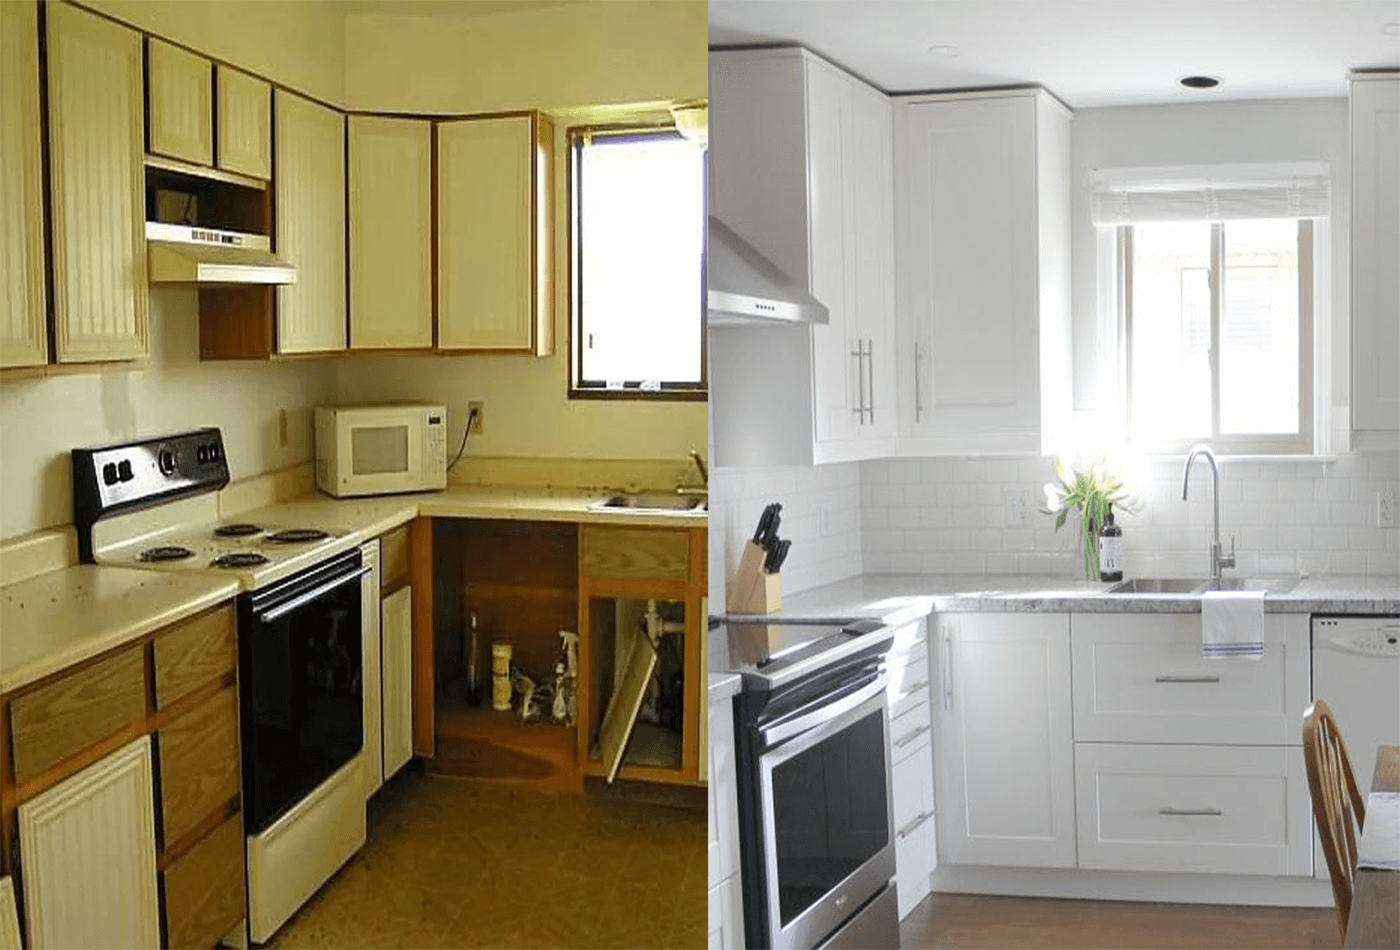 Kitchen Work tops; a Responsible Renovation